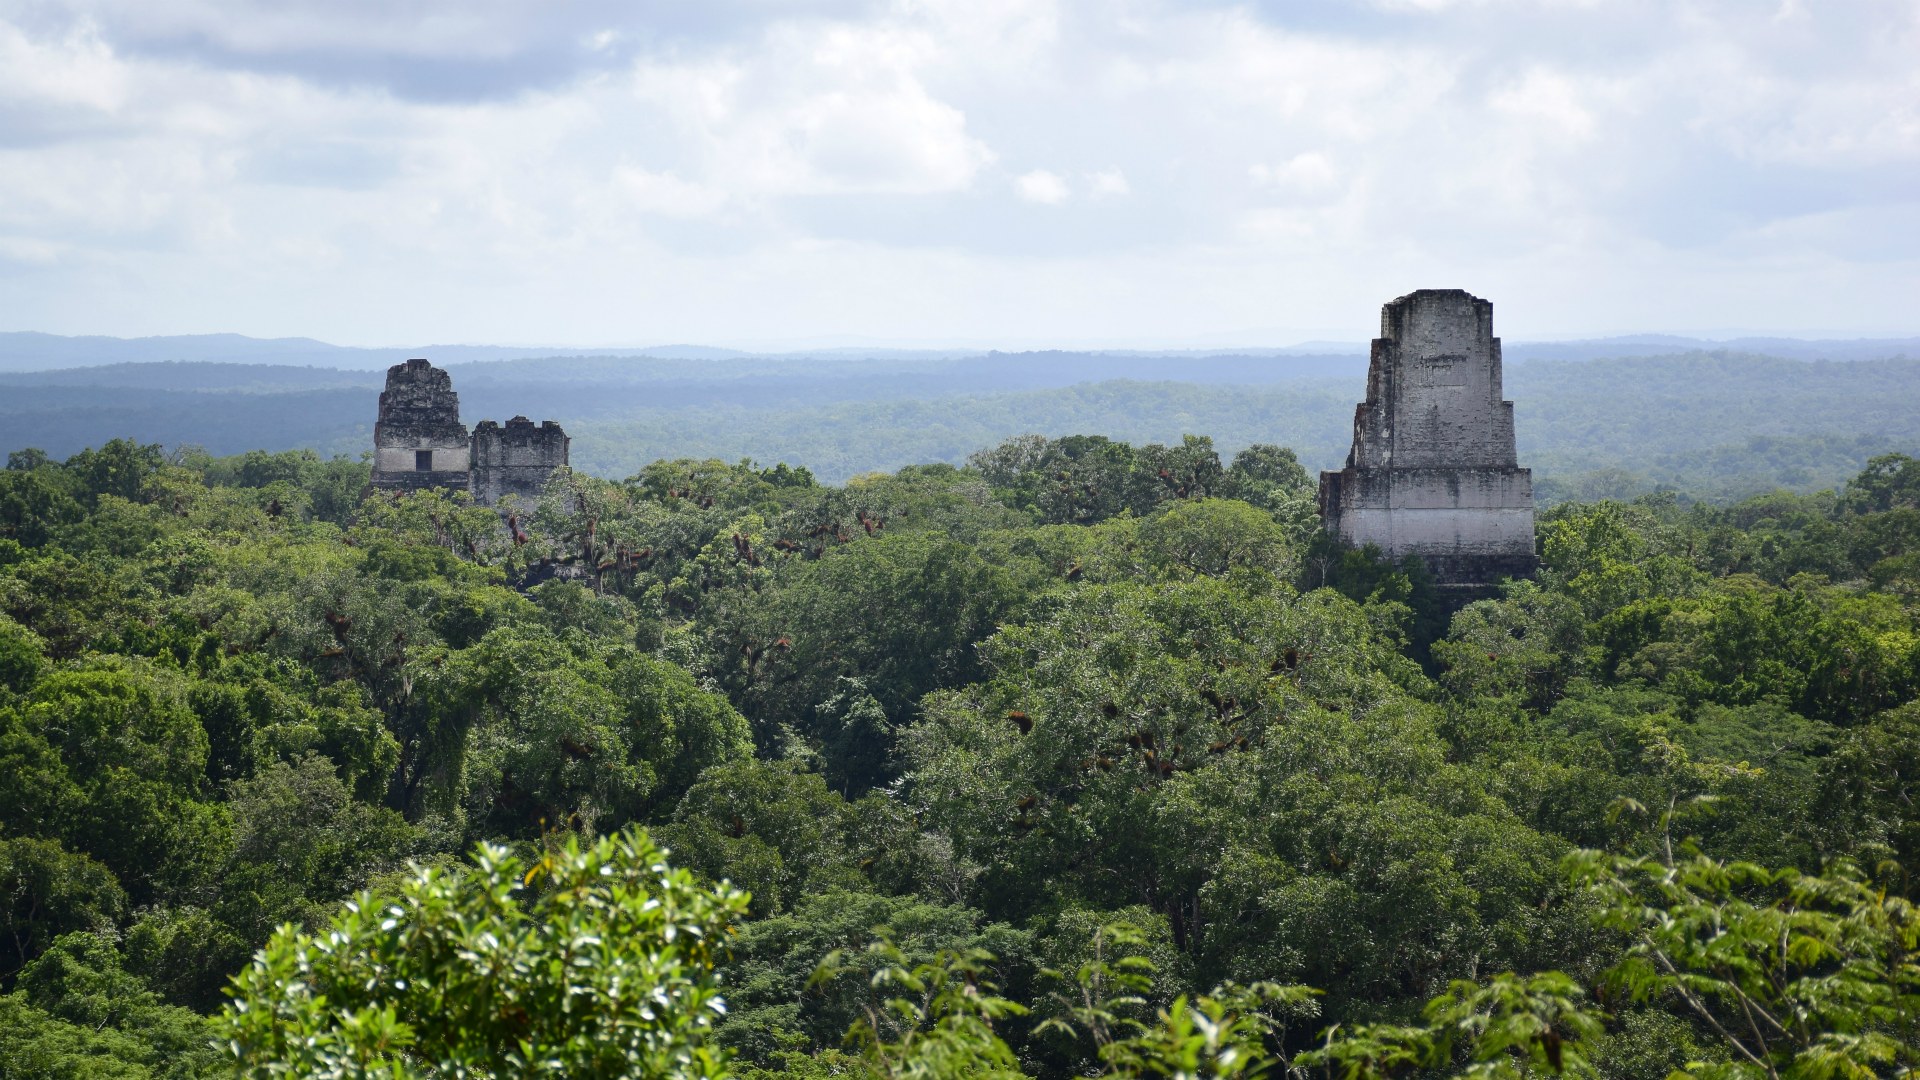 Temples I, II and III, Tikal, Guatemala